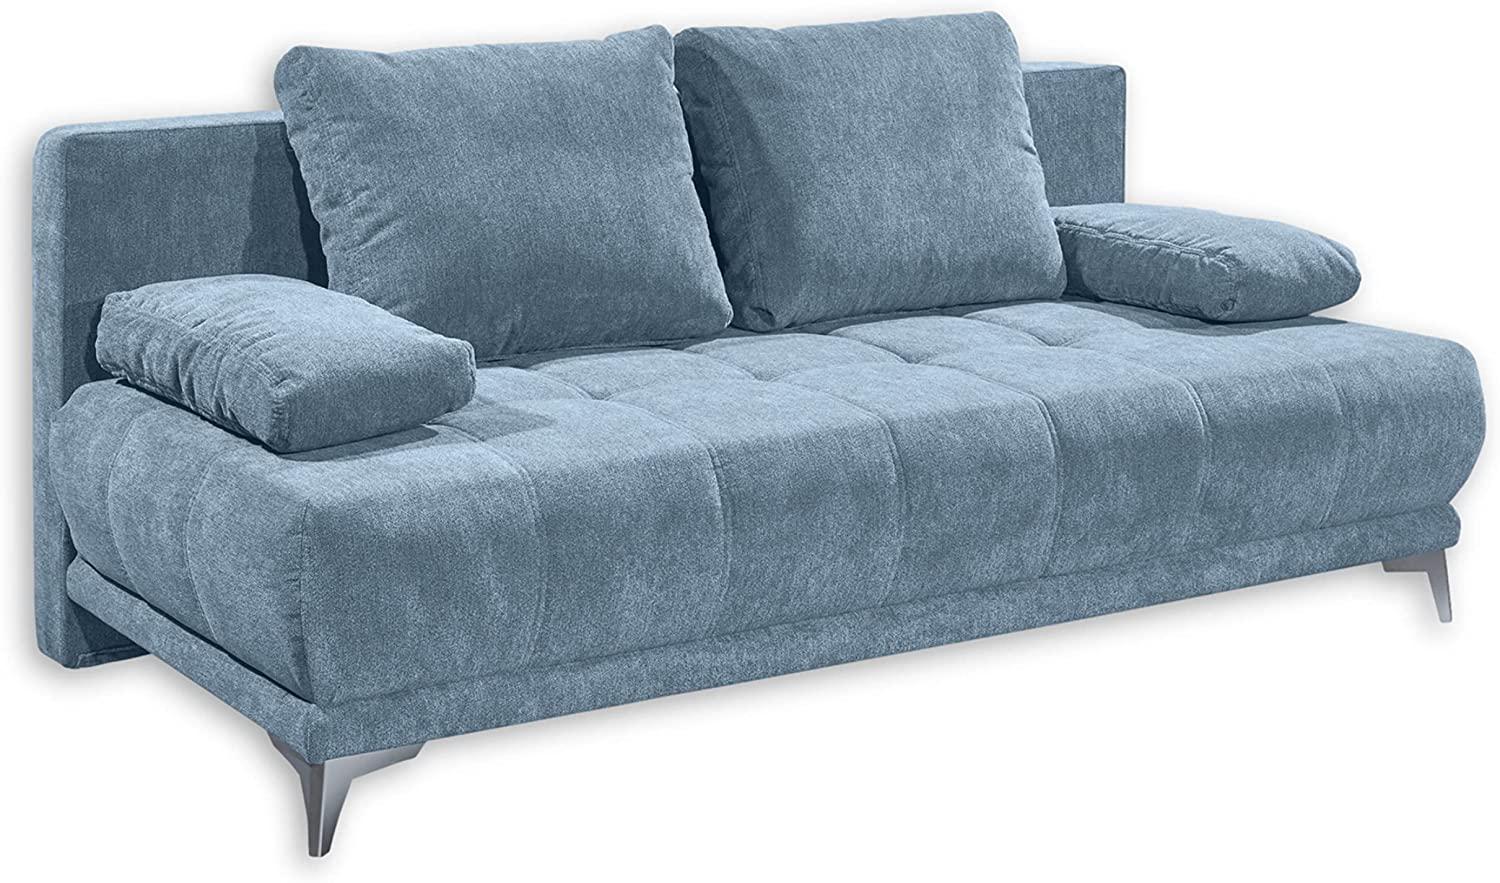 Couch Sofa Zweisitzer JENNY Schlafcouch Schlafsofa ausziehbar denim blau 203cm Bild 1